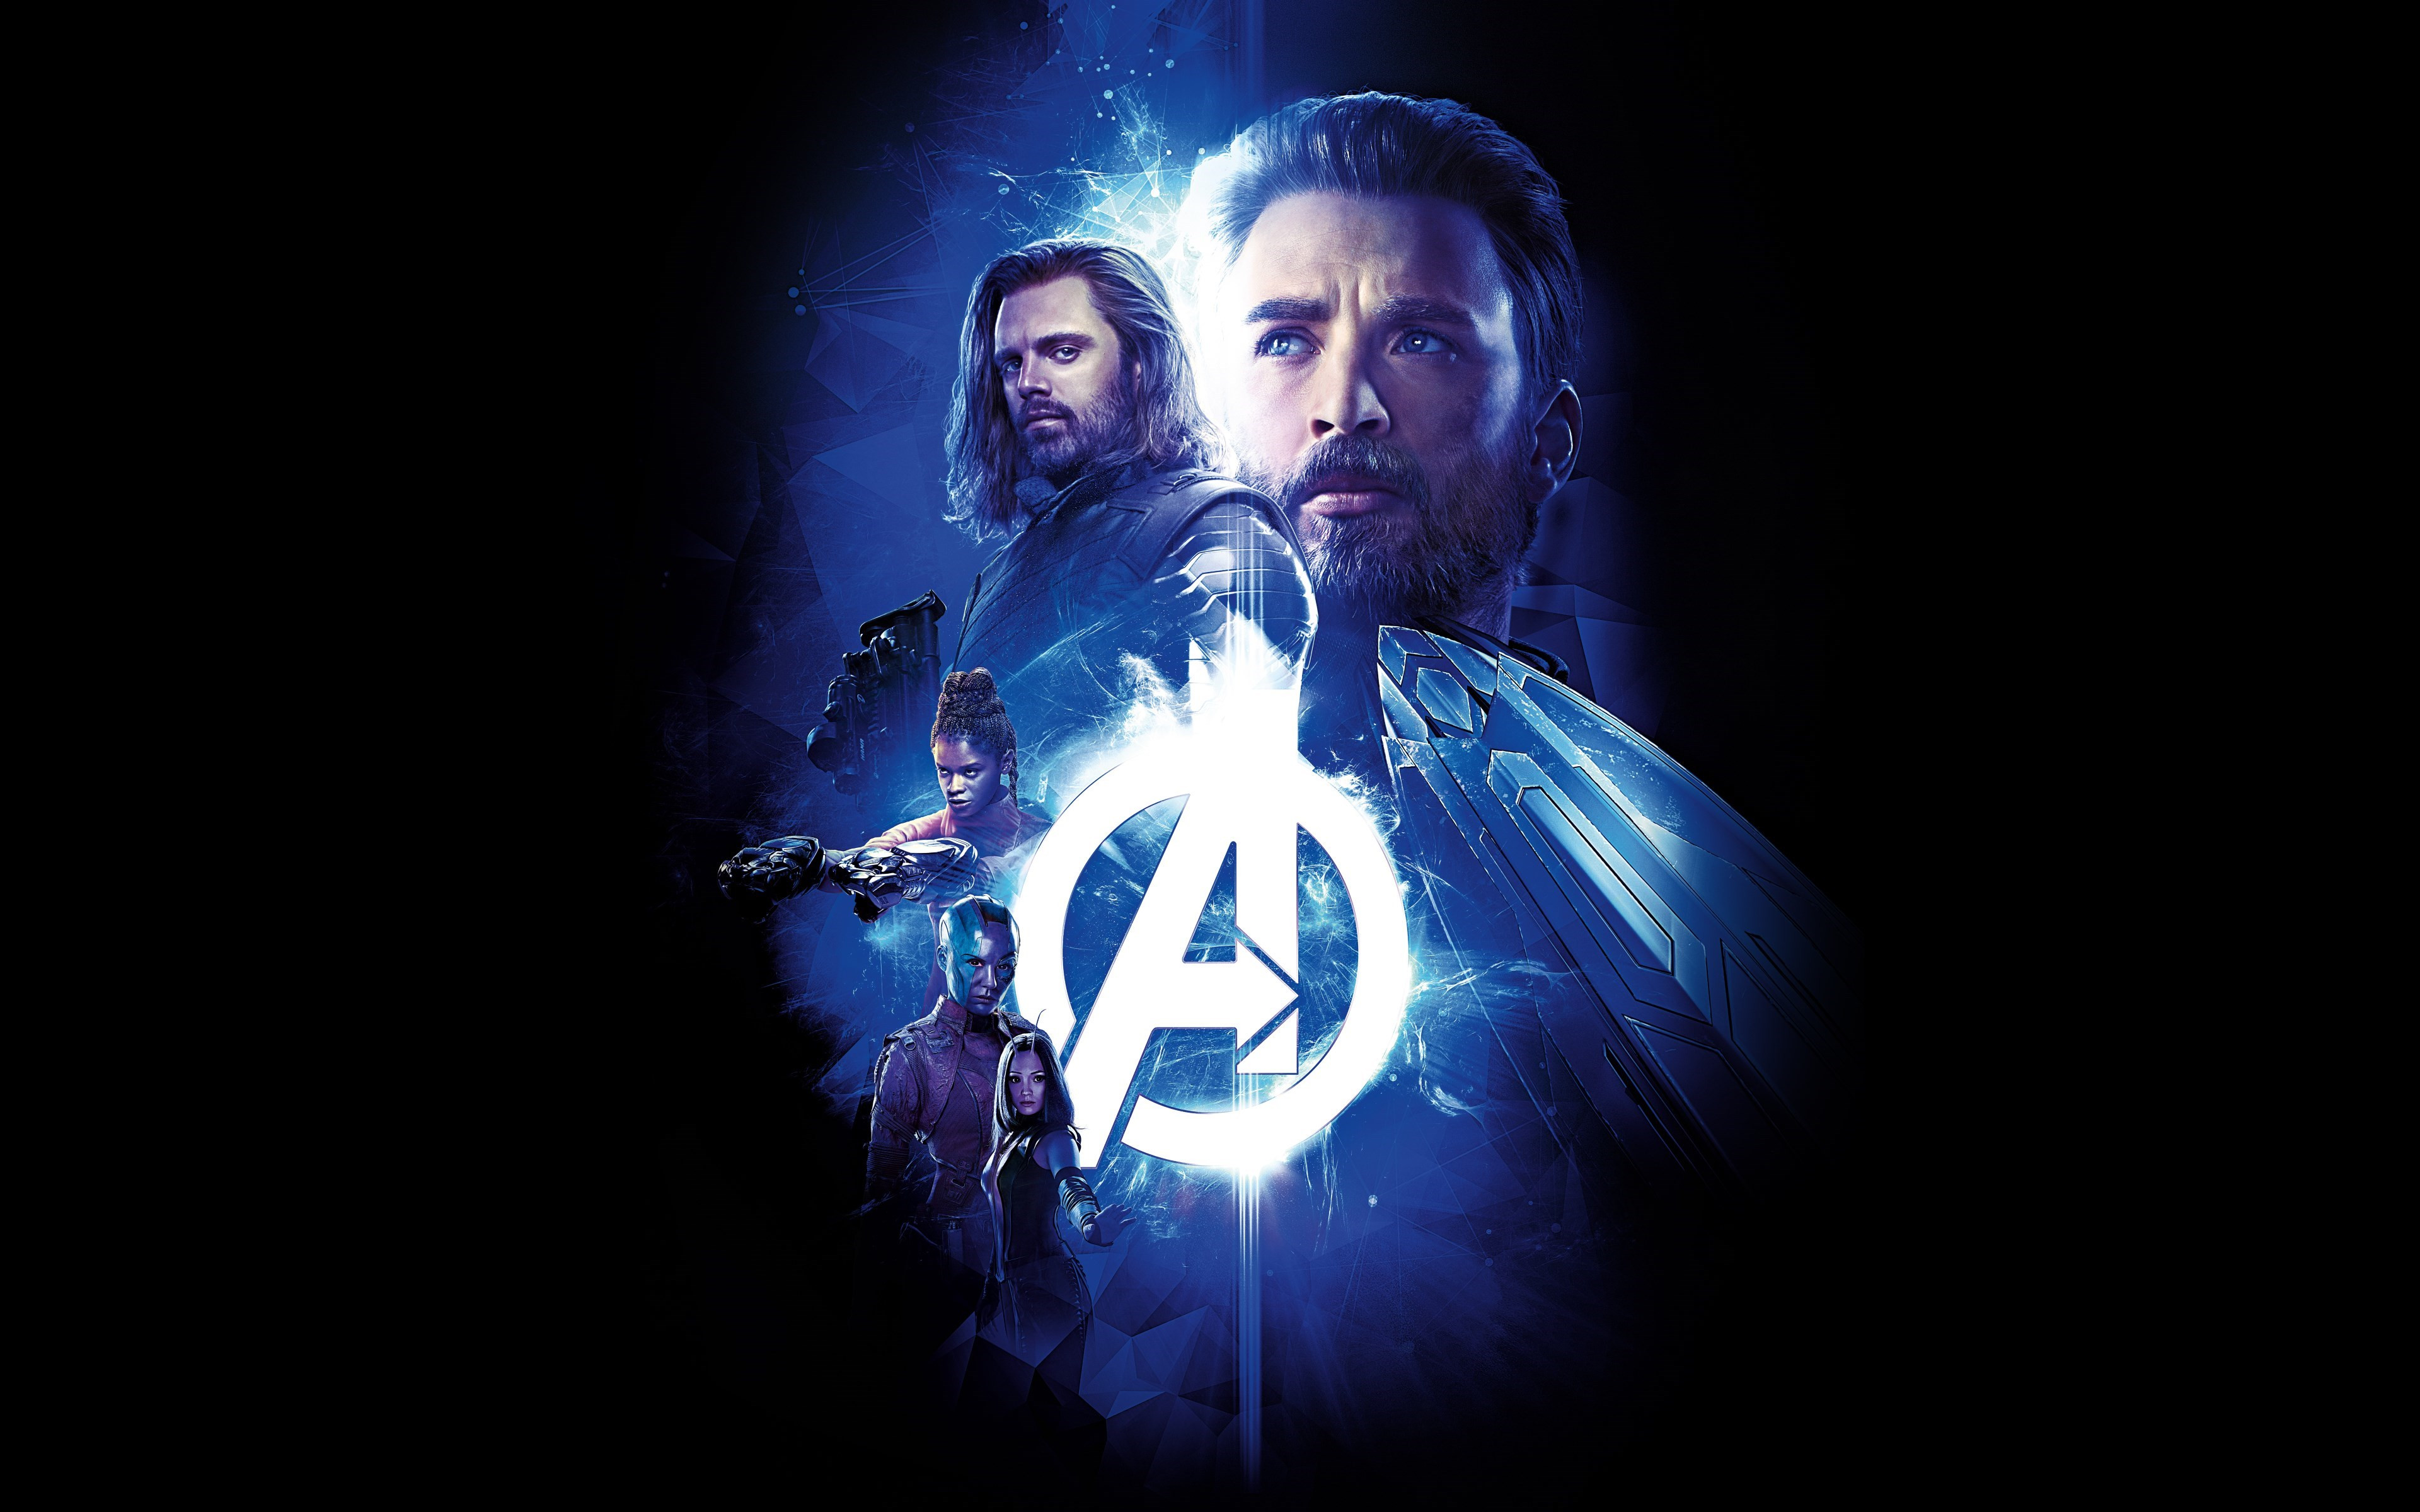 Download wallpaper: Avengers: Infinity War 3840x2400